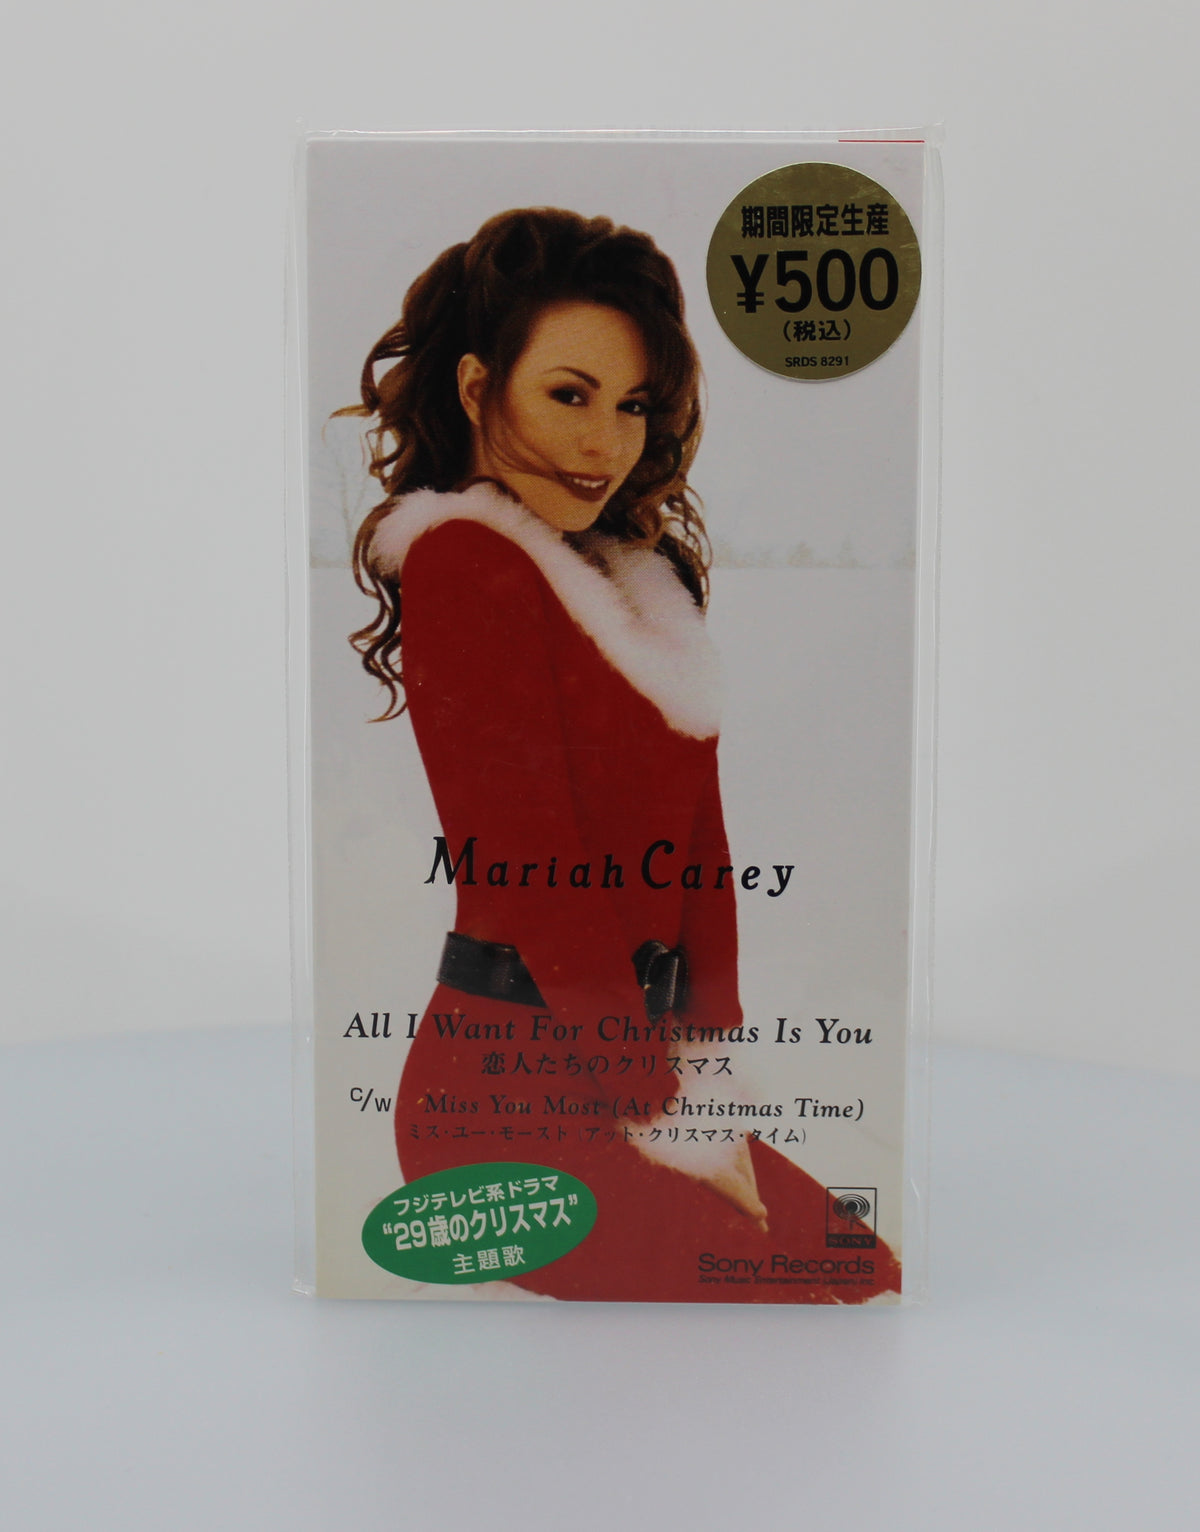 Mariah Carey – All I Want For Christmas Is You, CD Mini Single, Japan 1994